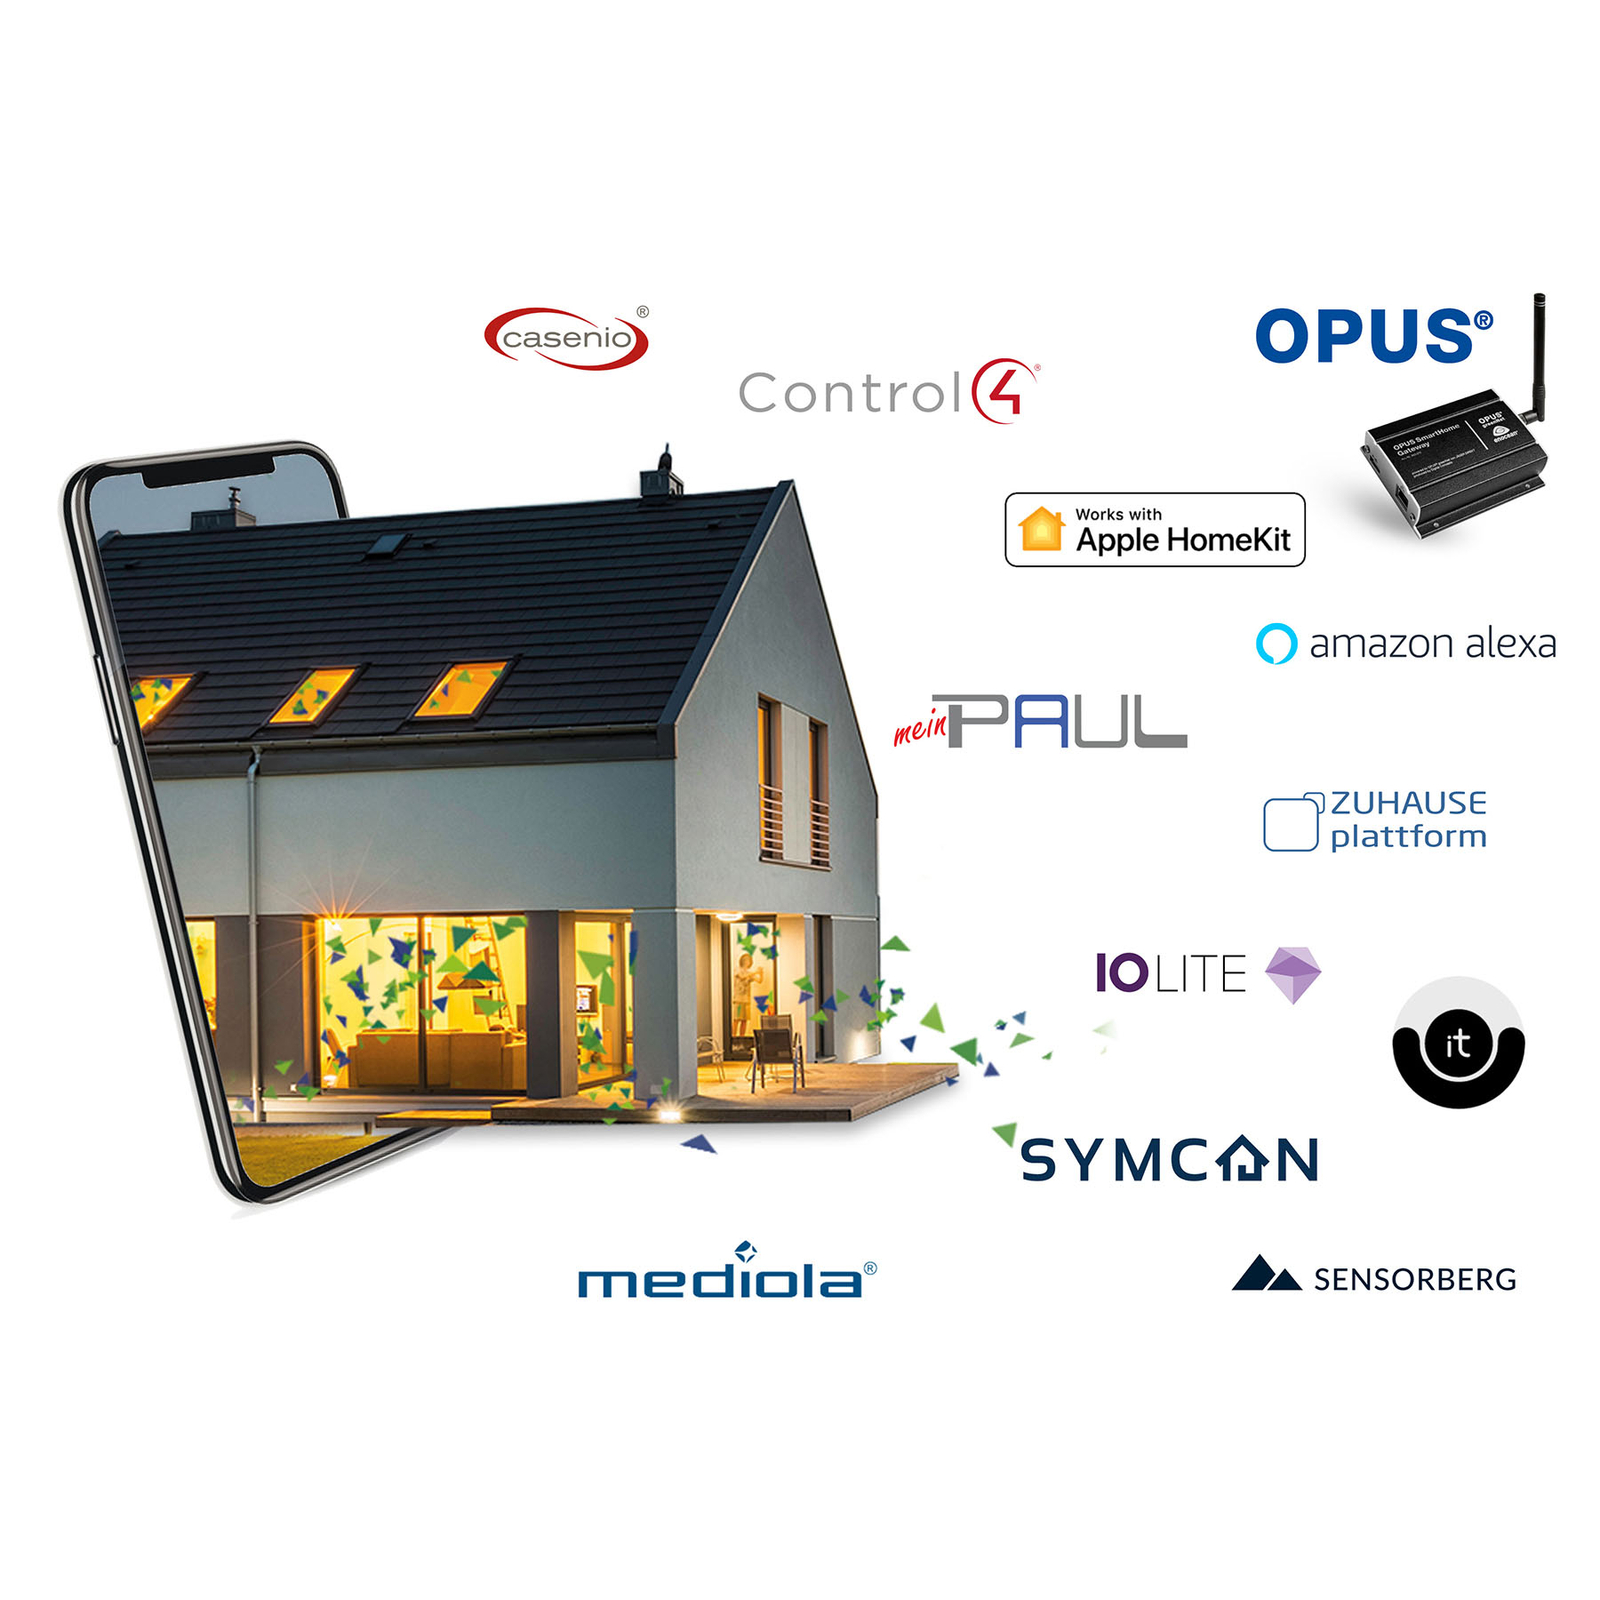 "OPUS Smart Home Gateway